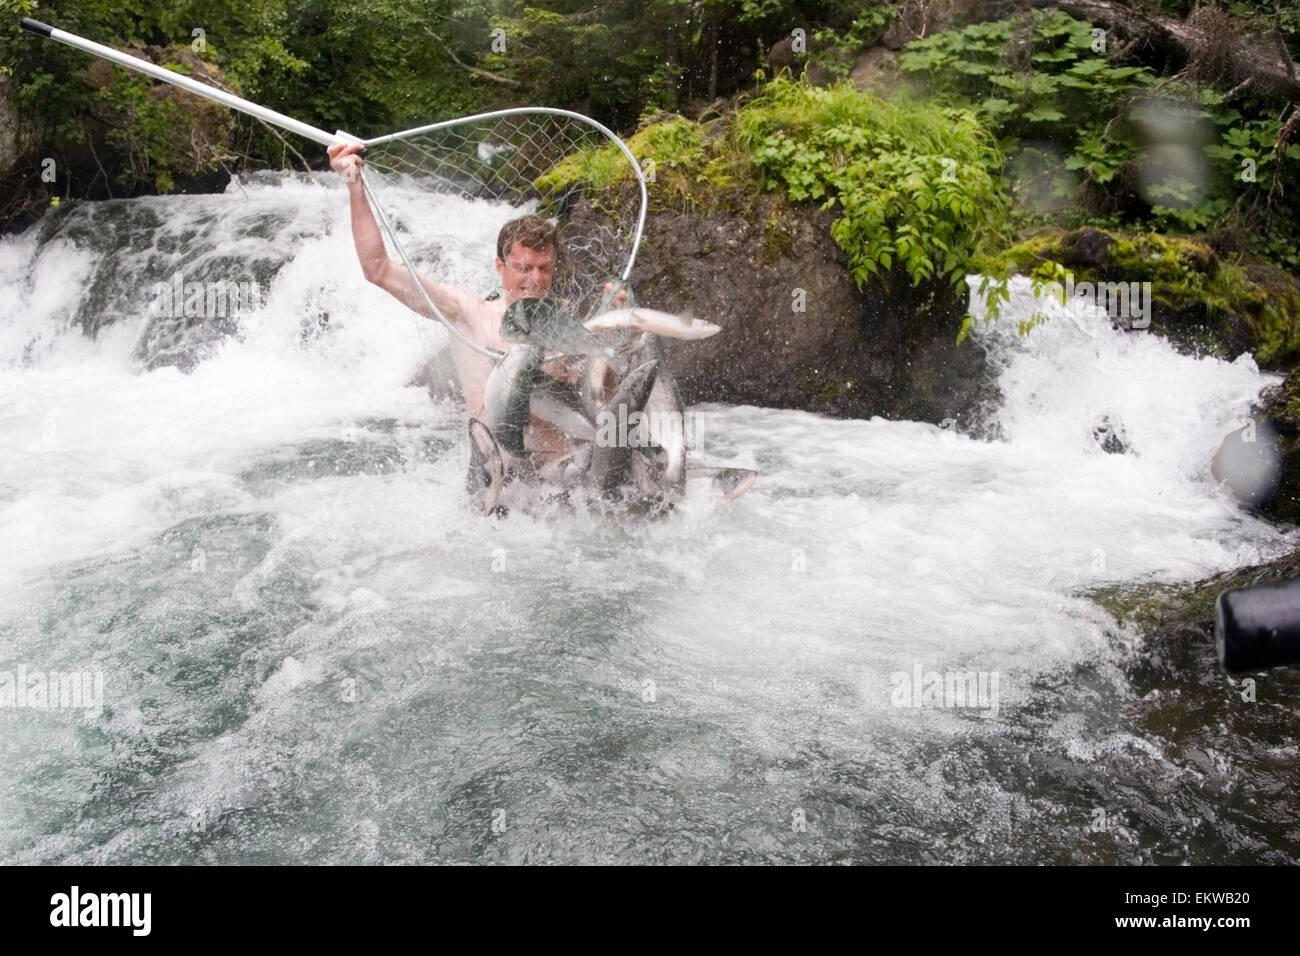 Fisherman Holding A Dipnetwith Fish Caught In Net As He Falls Backward Into The Water China Poot Creek Kenai Peninsula Alaska Stock Photo